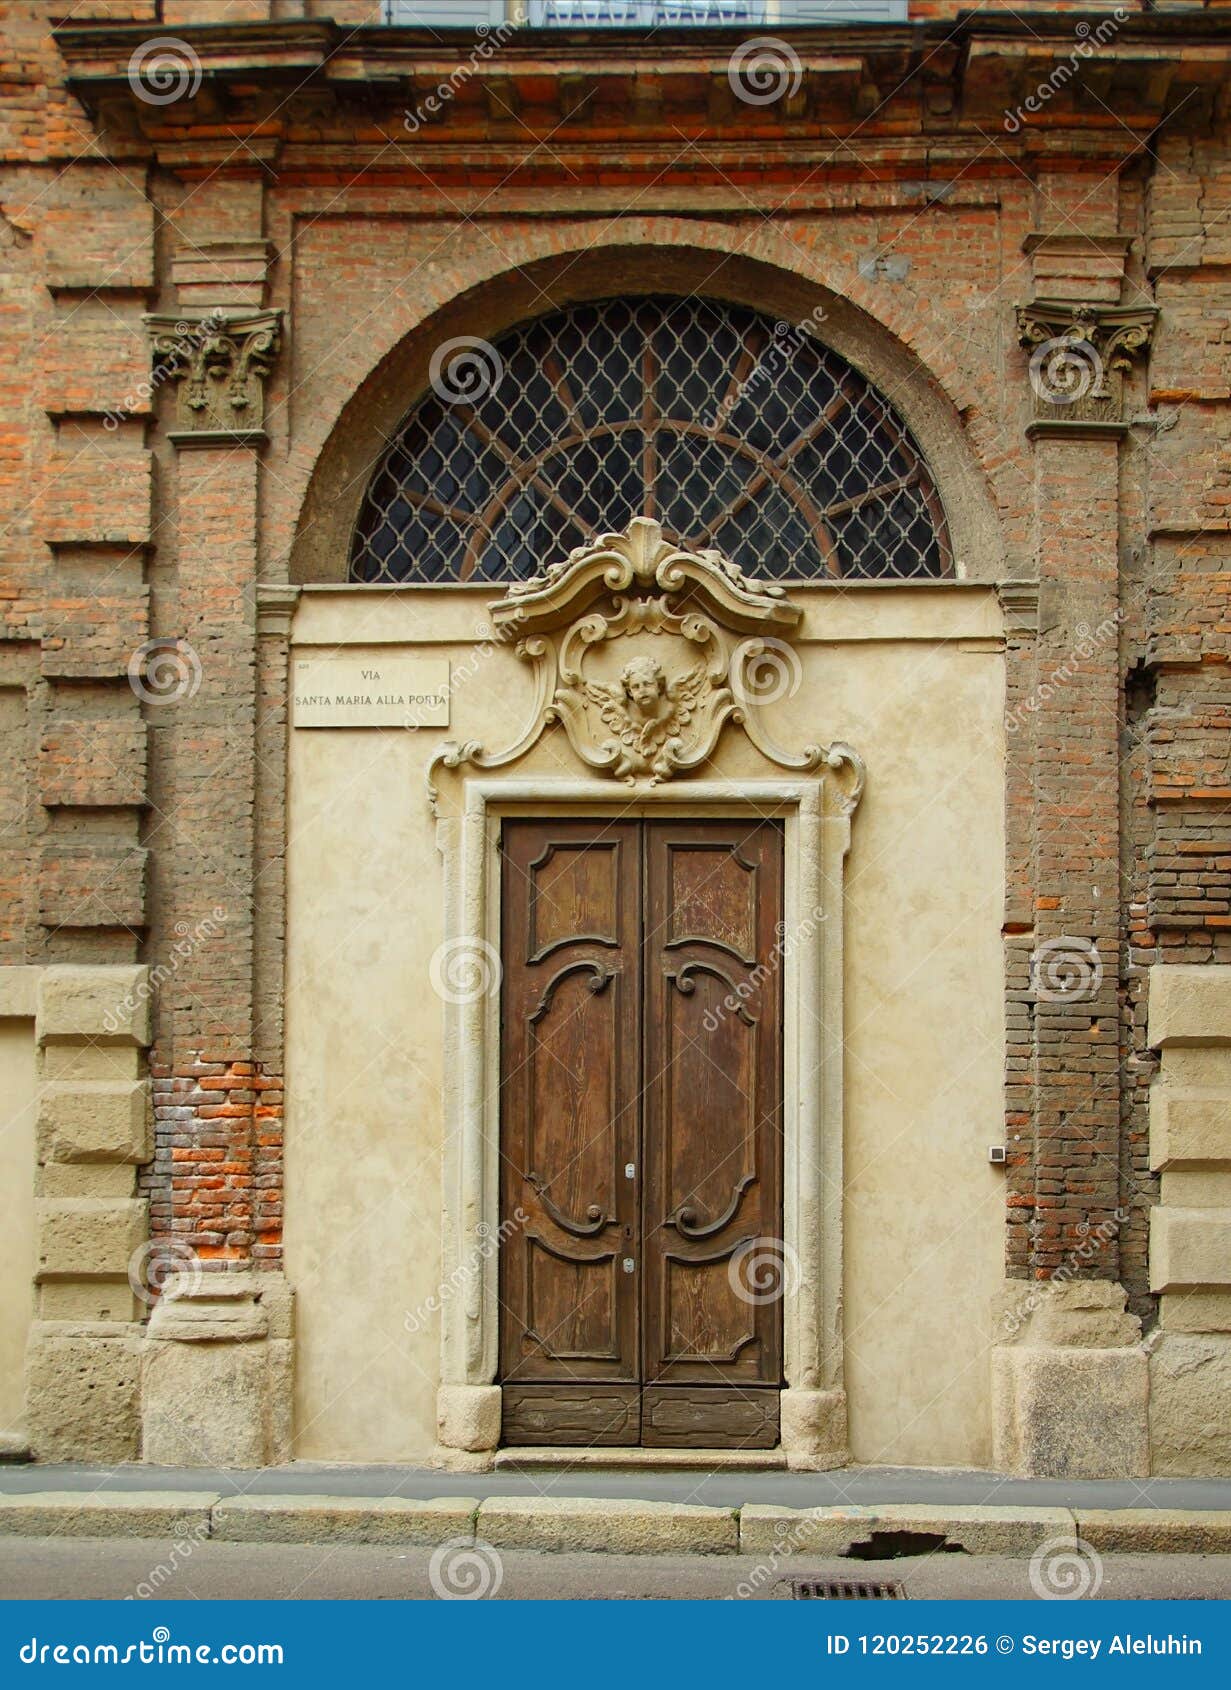 entrance to the church church of san matteo alla bacchette